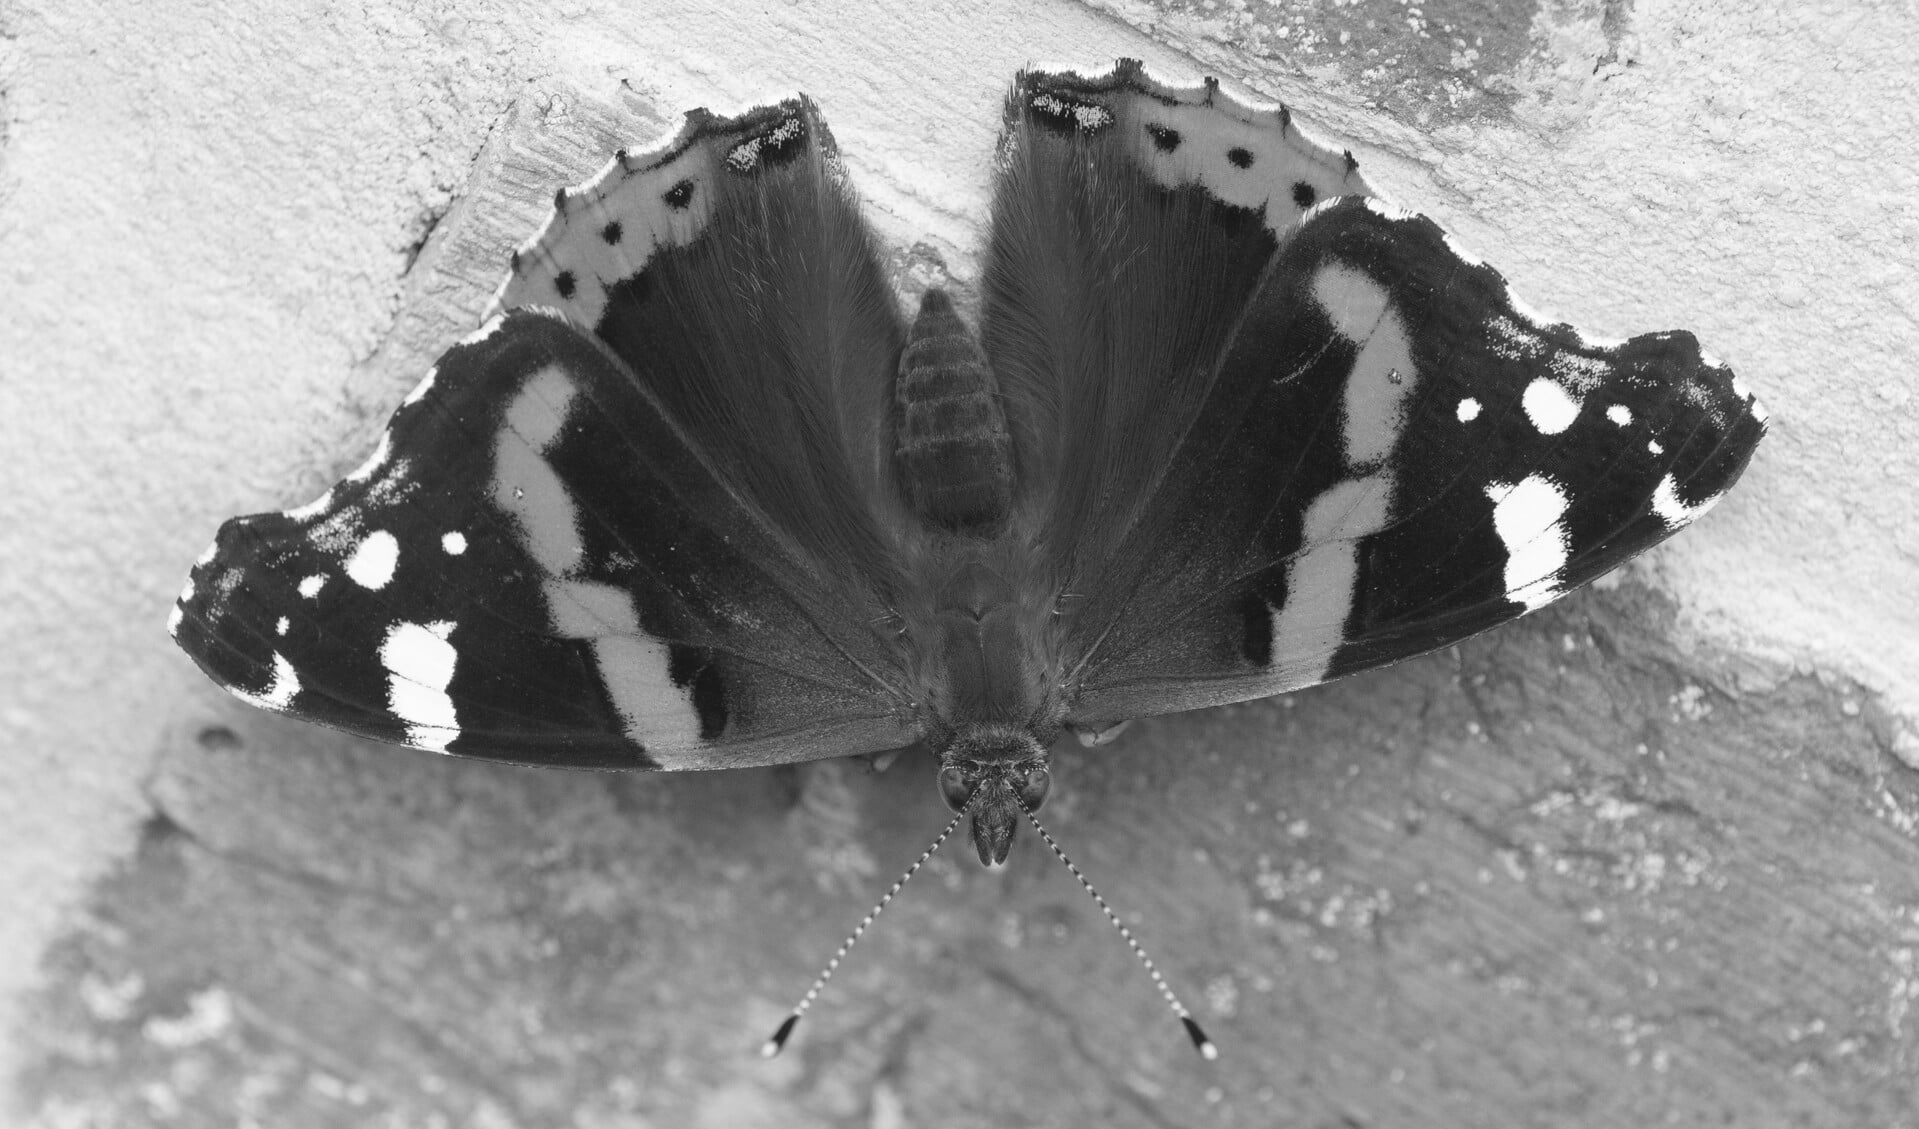 De atlanta vlinder kan 15 km per uur vliegen, zo snel als de gemiddeld fietser, en legt enorme afstanden af. 